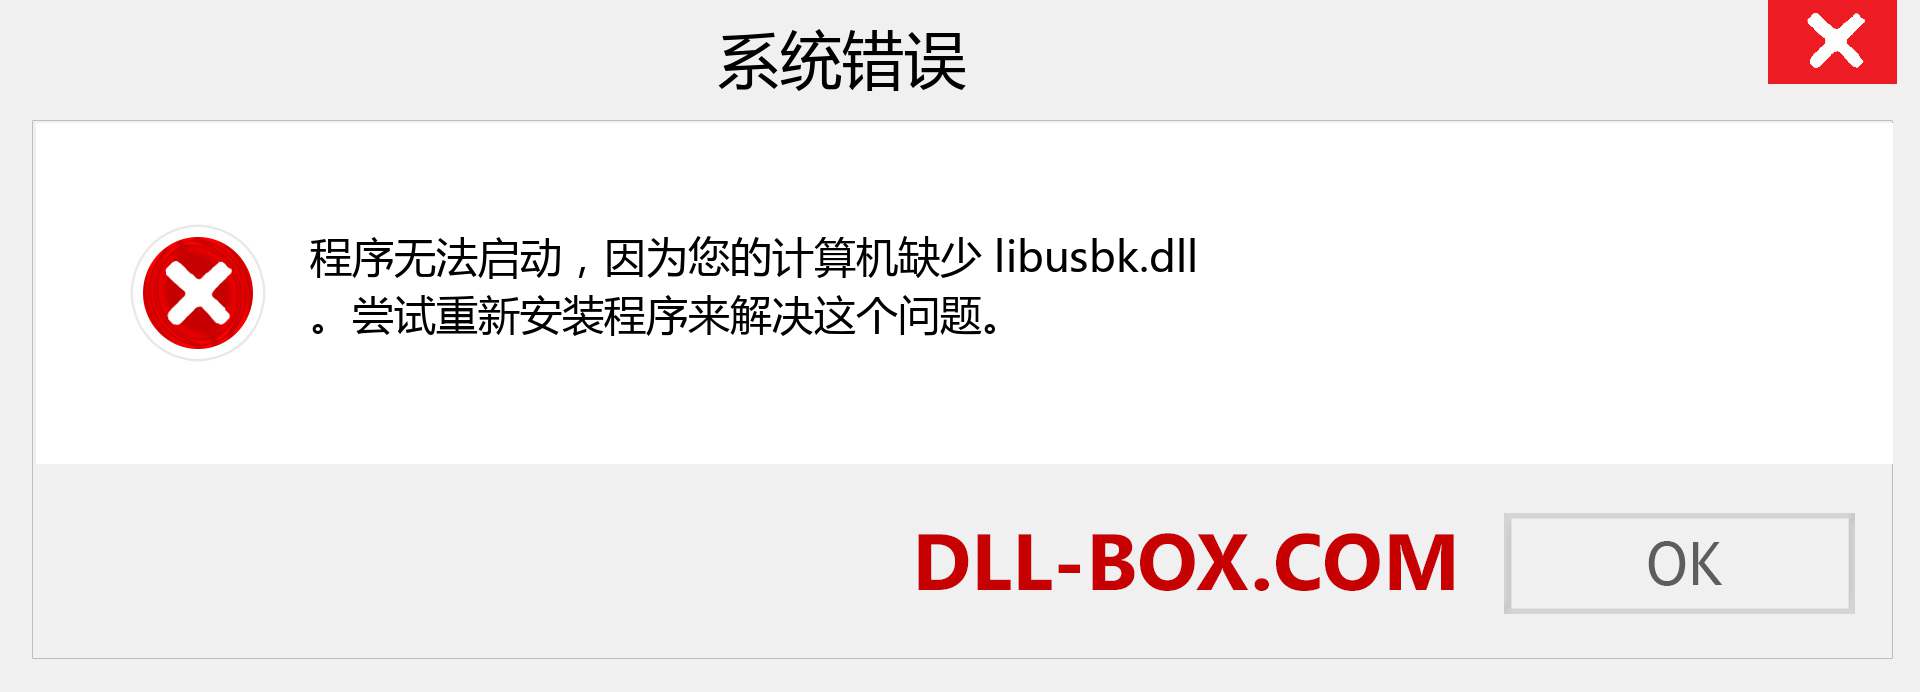 libusbk.dll 文件丢失？。 适用于 Windows 7、8、10 的下载 - 修复 Windows、照片、图像上的 libusbk dll 丢失错误